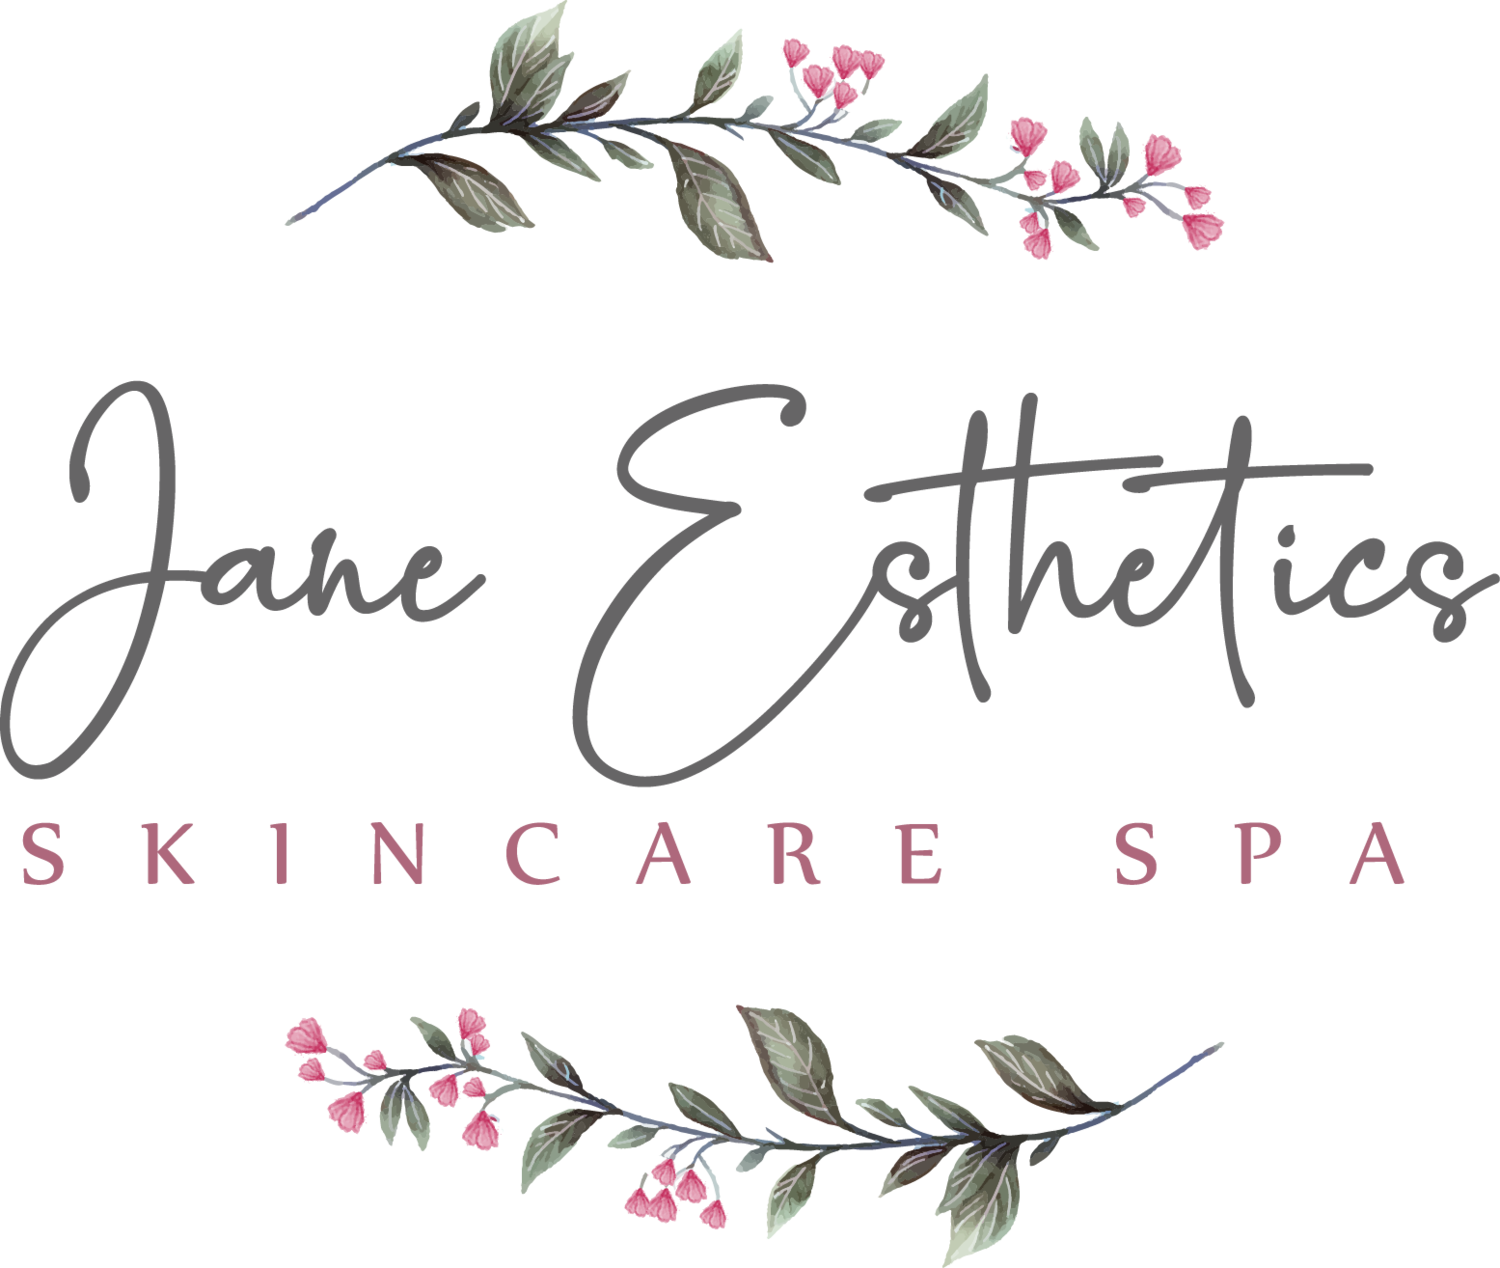 Jane Esthetics Skincare Spa